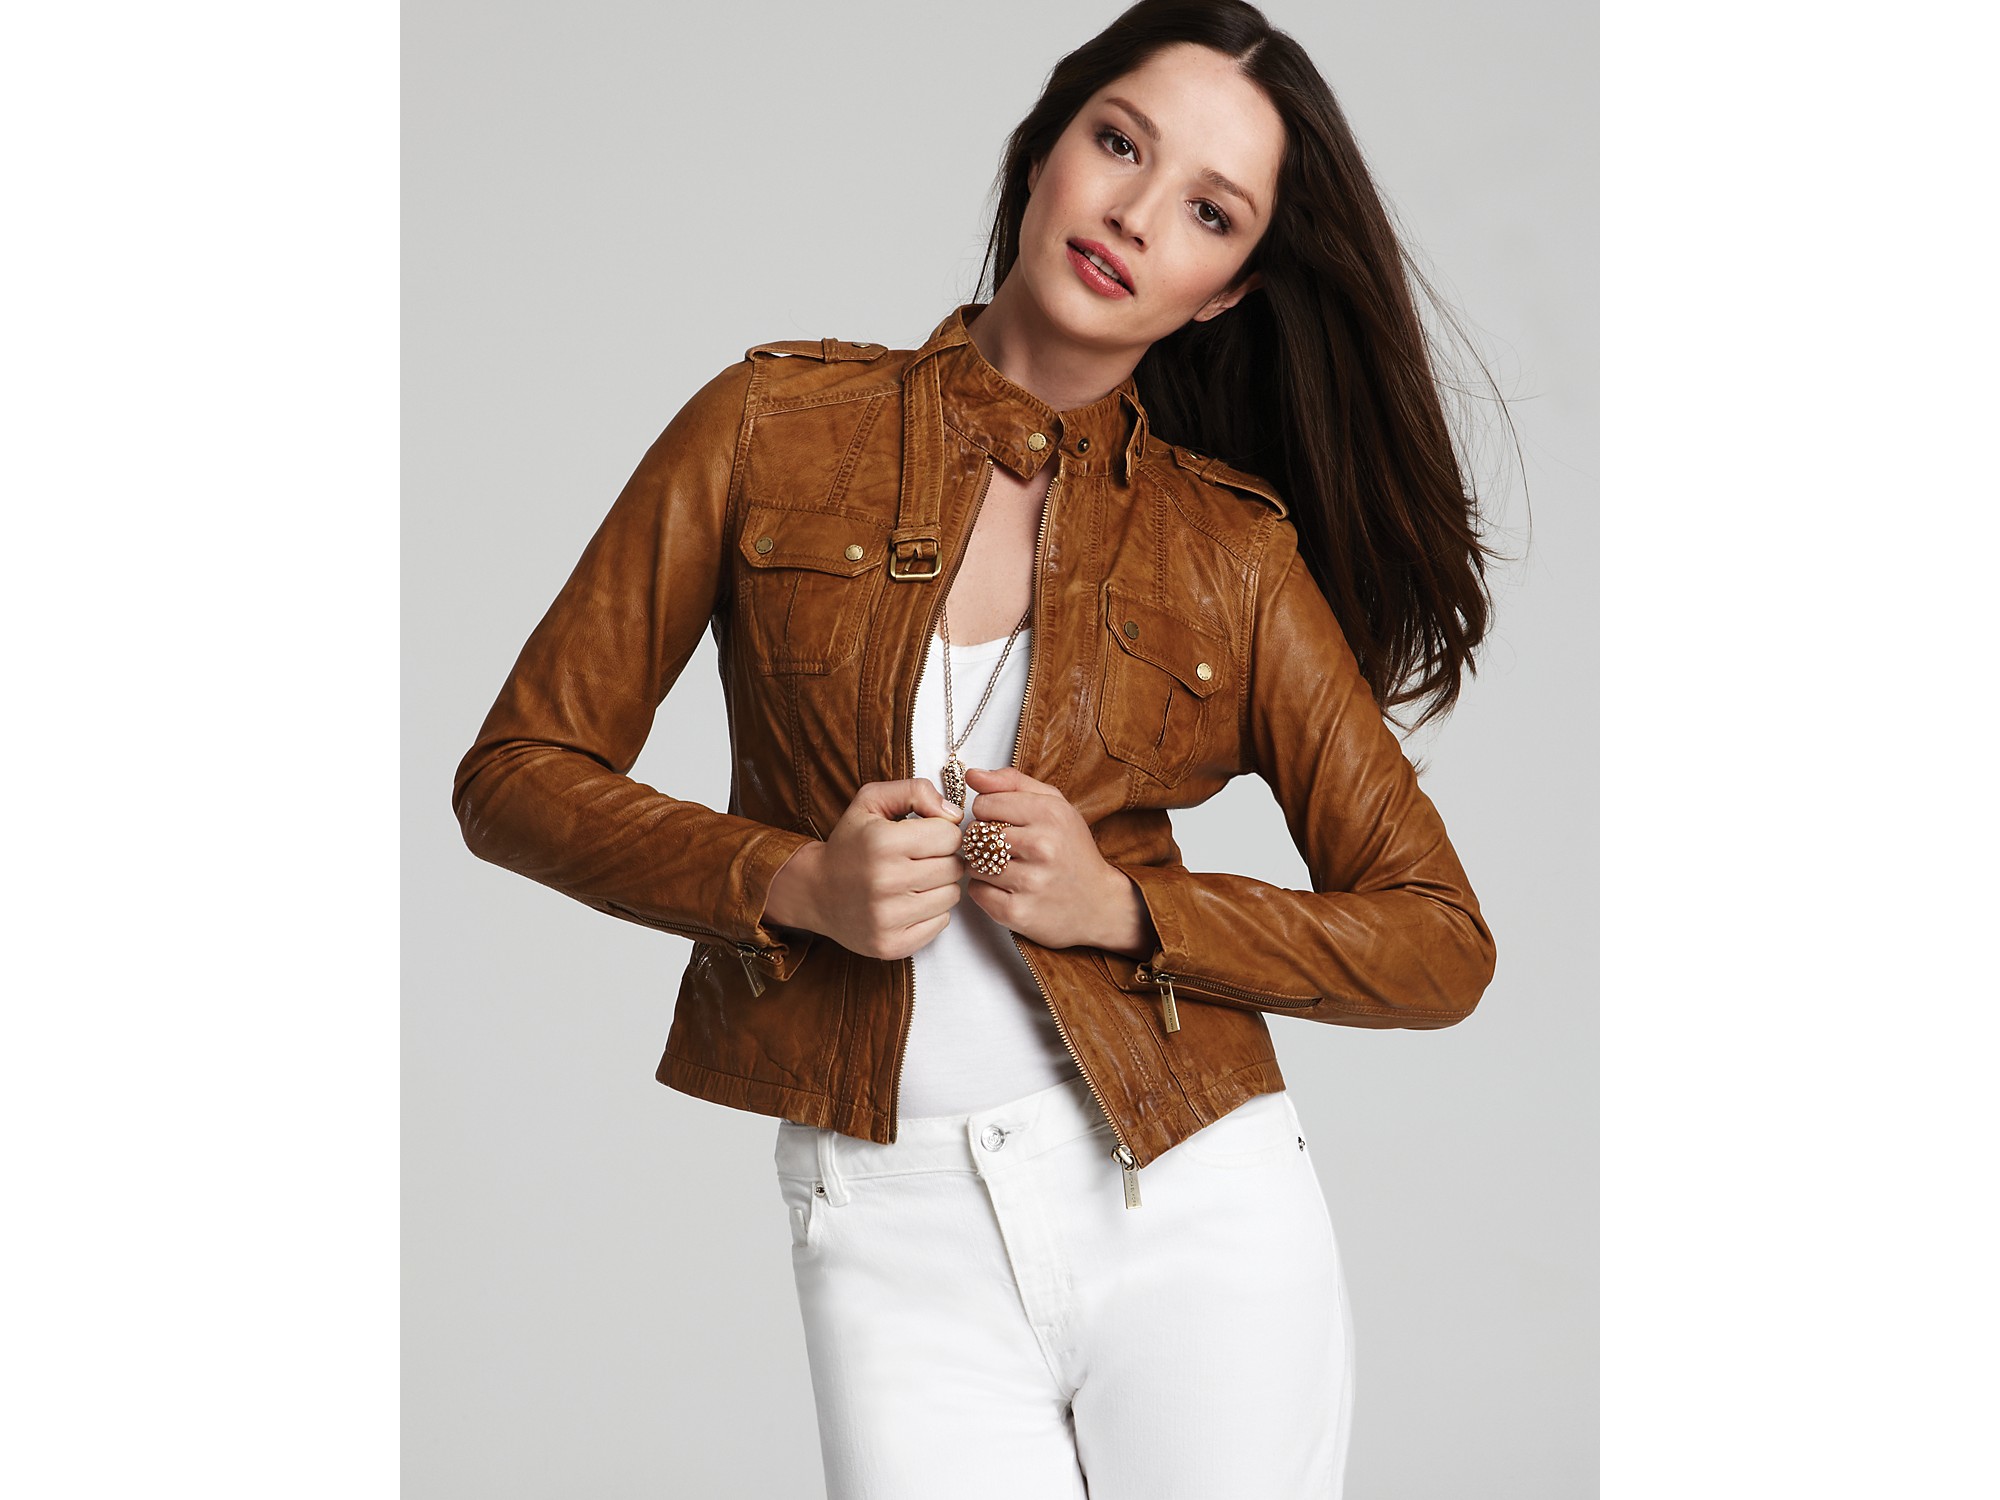 michael kors brown leather jacket womens